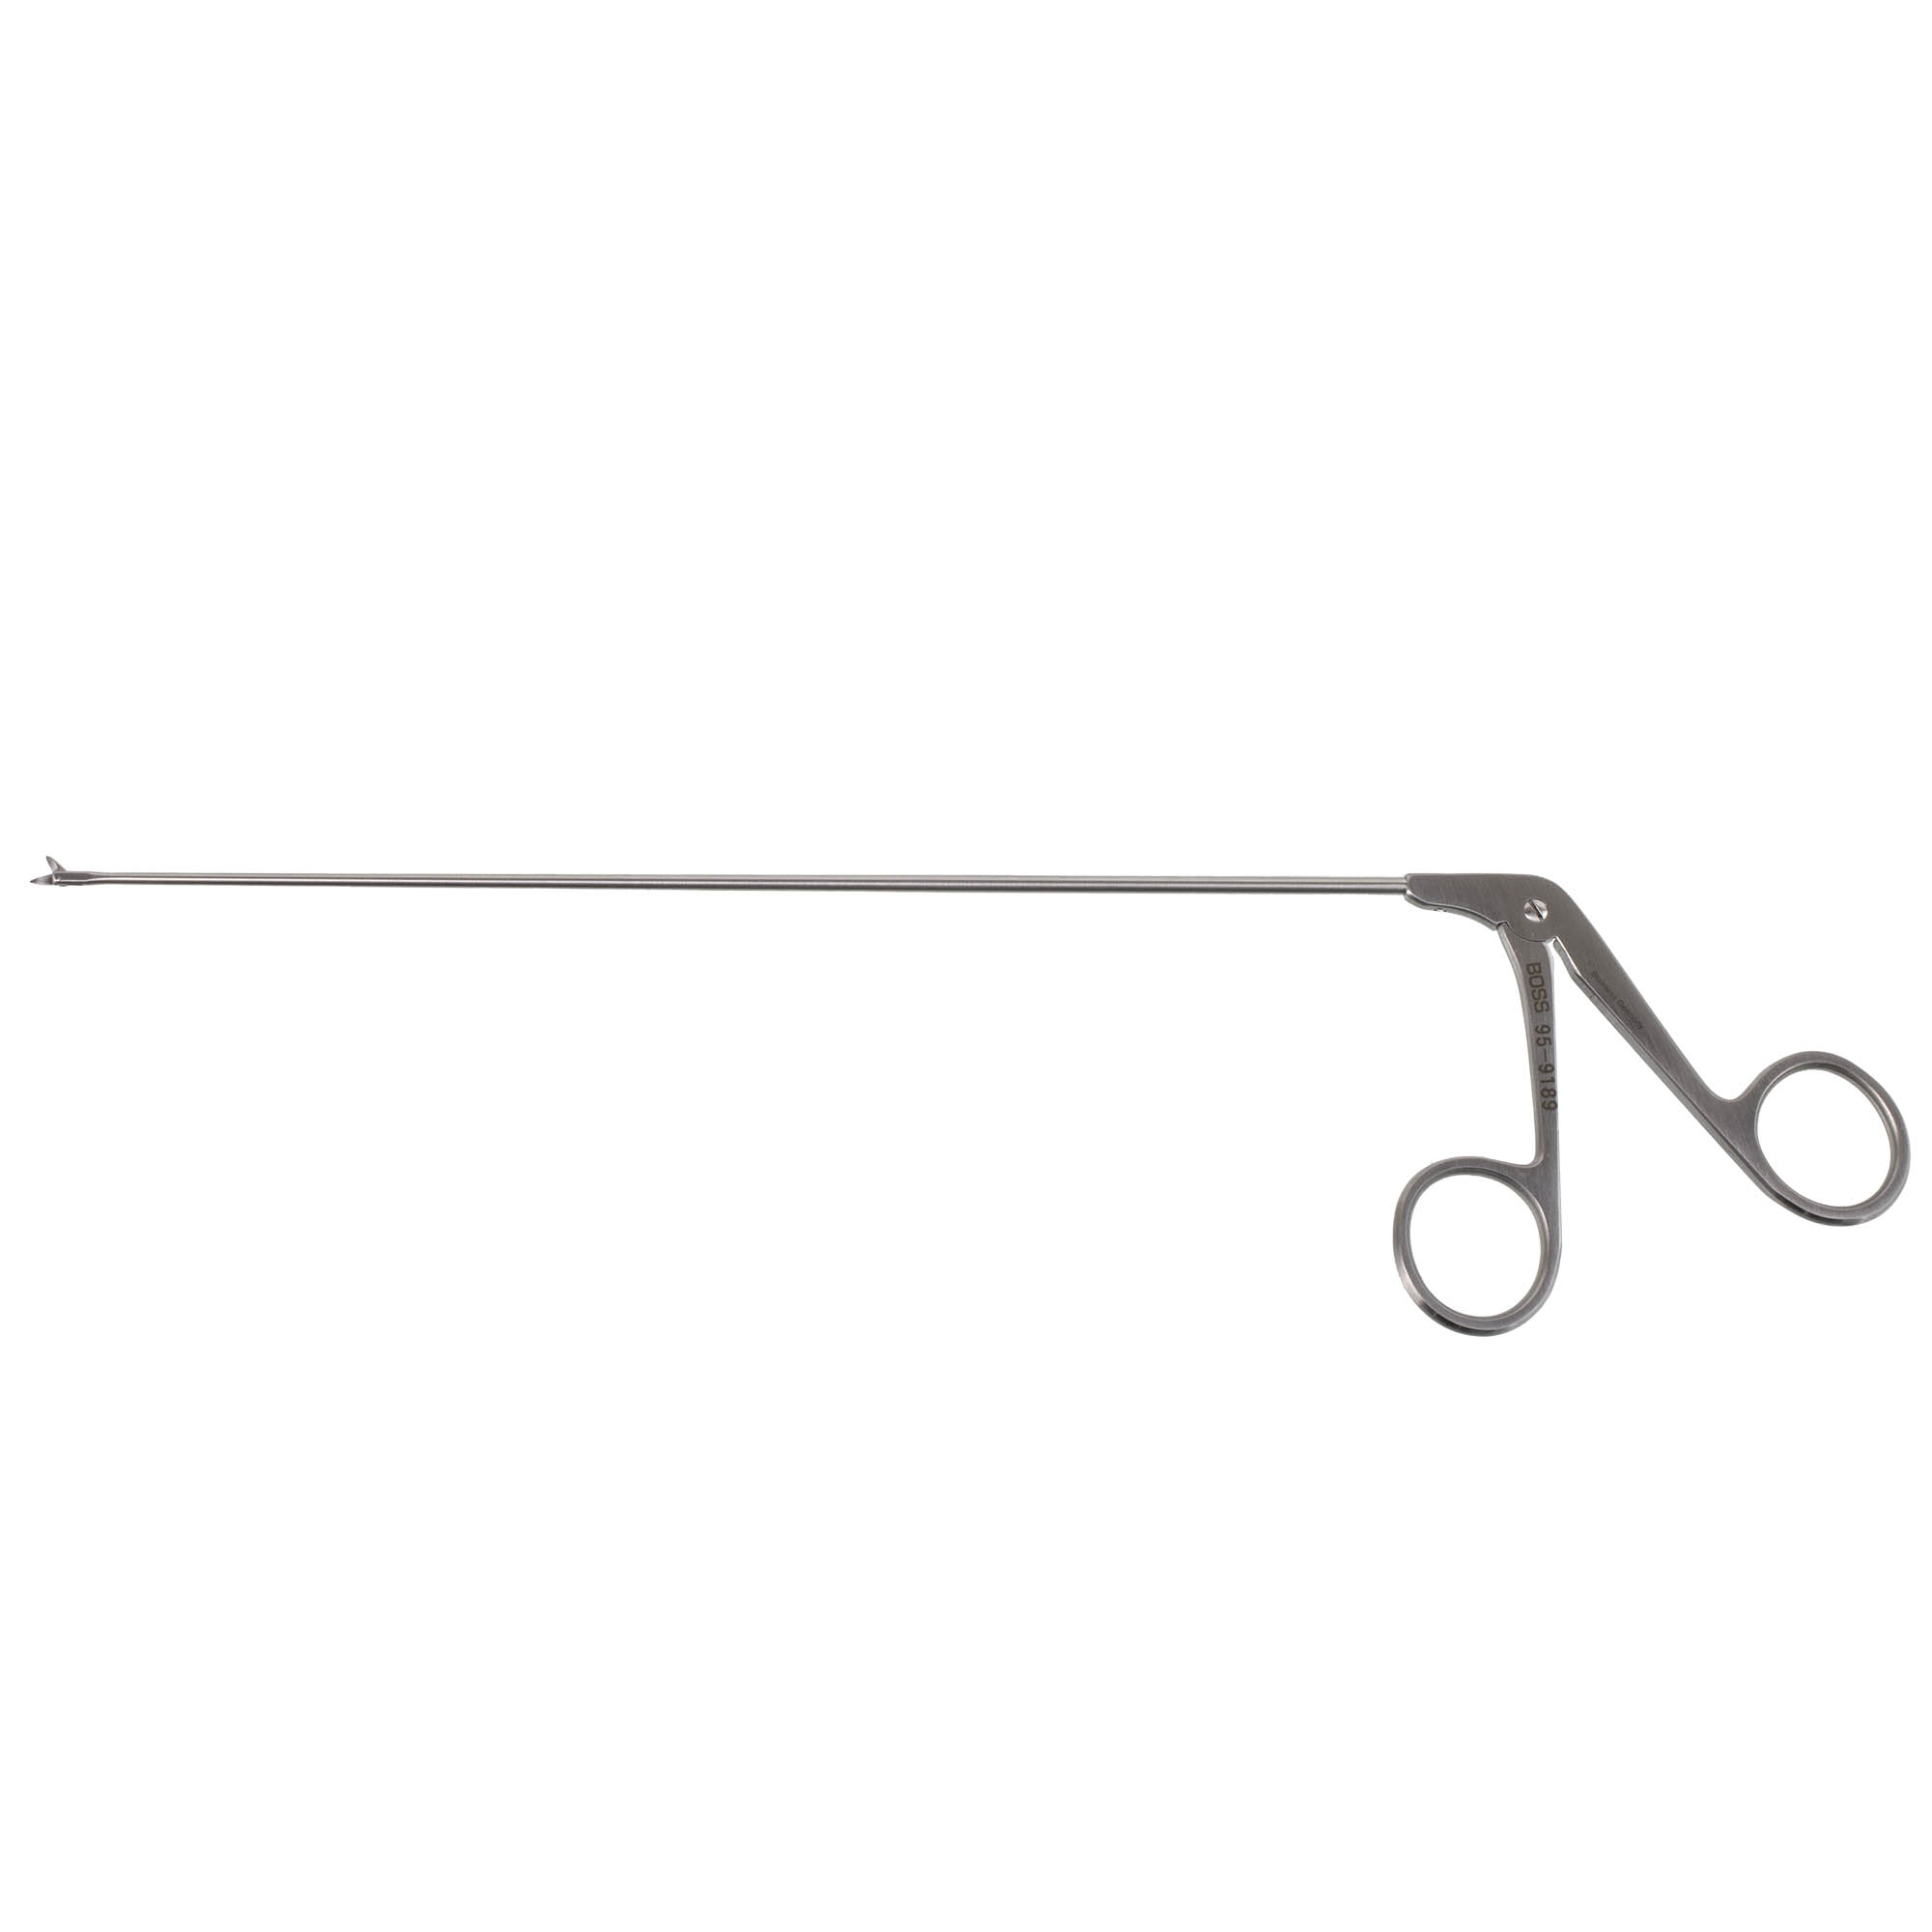 Kurze Decker Scissors - 5 1/4 blades curved right - BOSS Surgical  Instruments